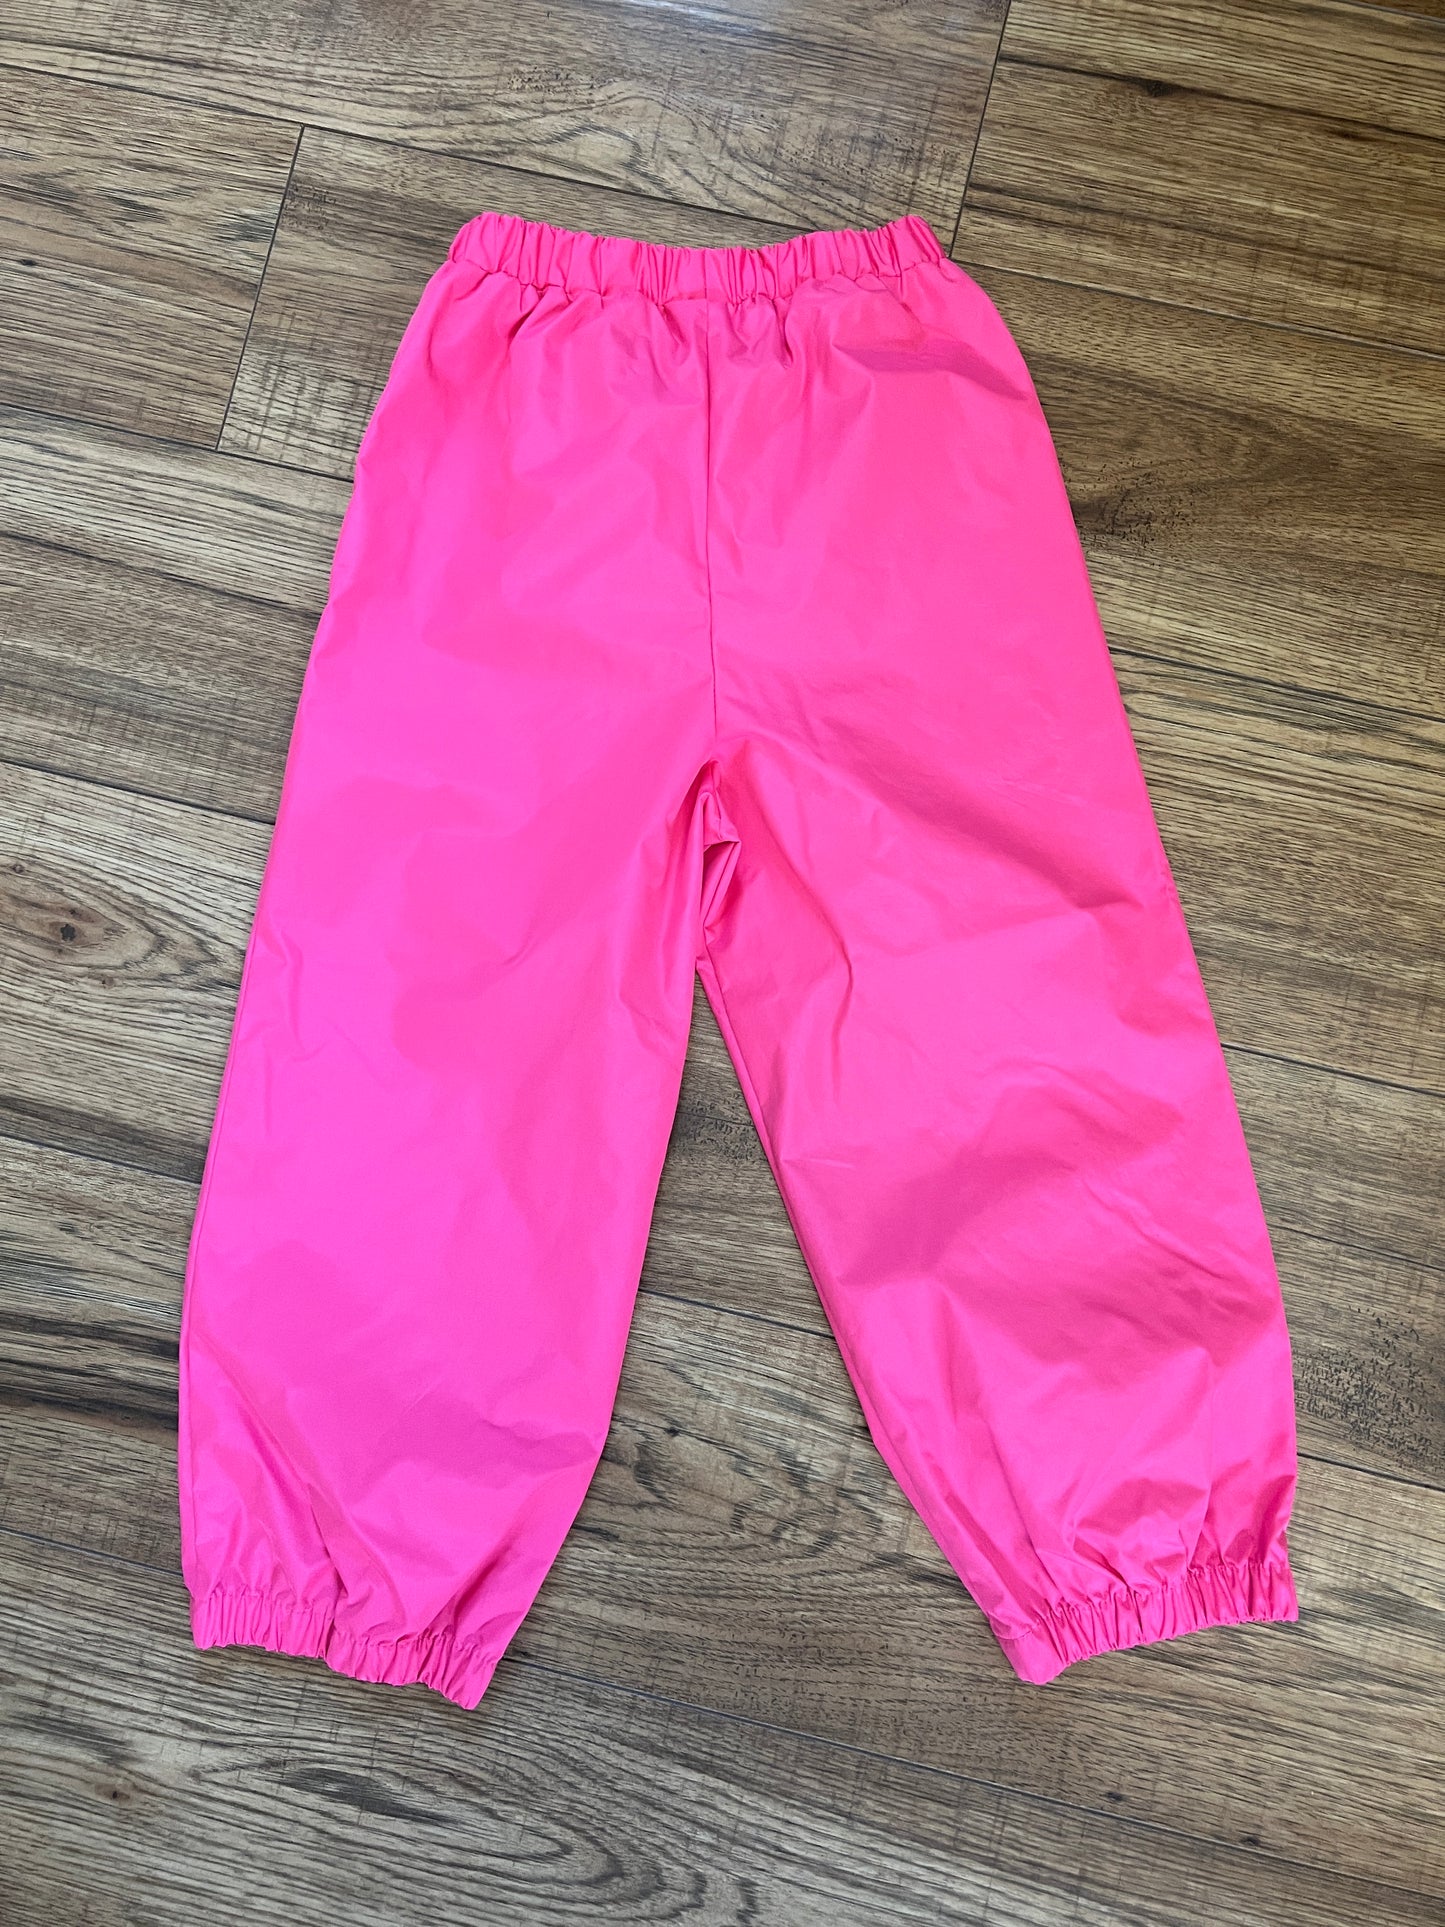 Rain Pants Child Size 5 Oshkosh Barbie Pink with Heart